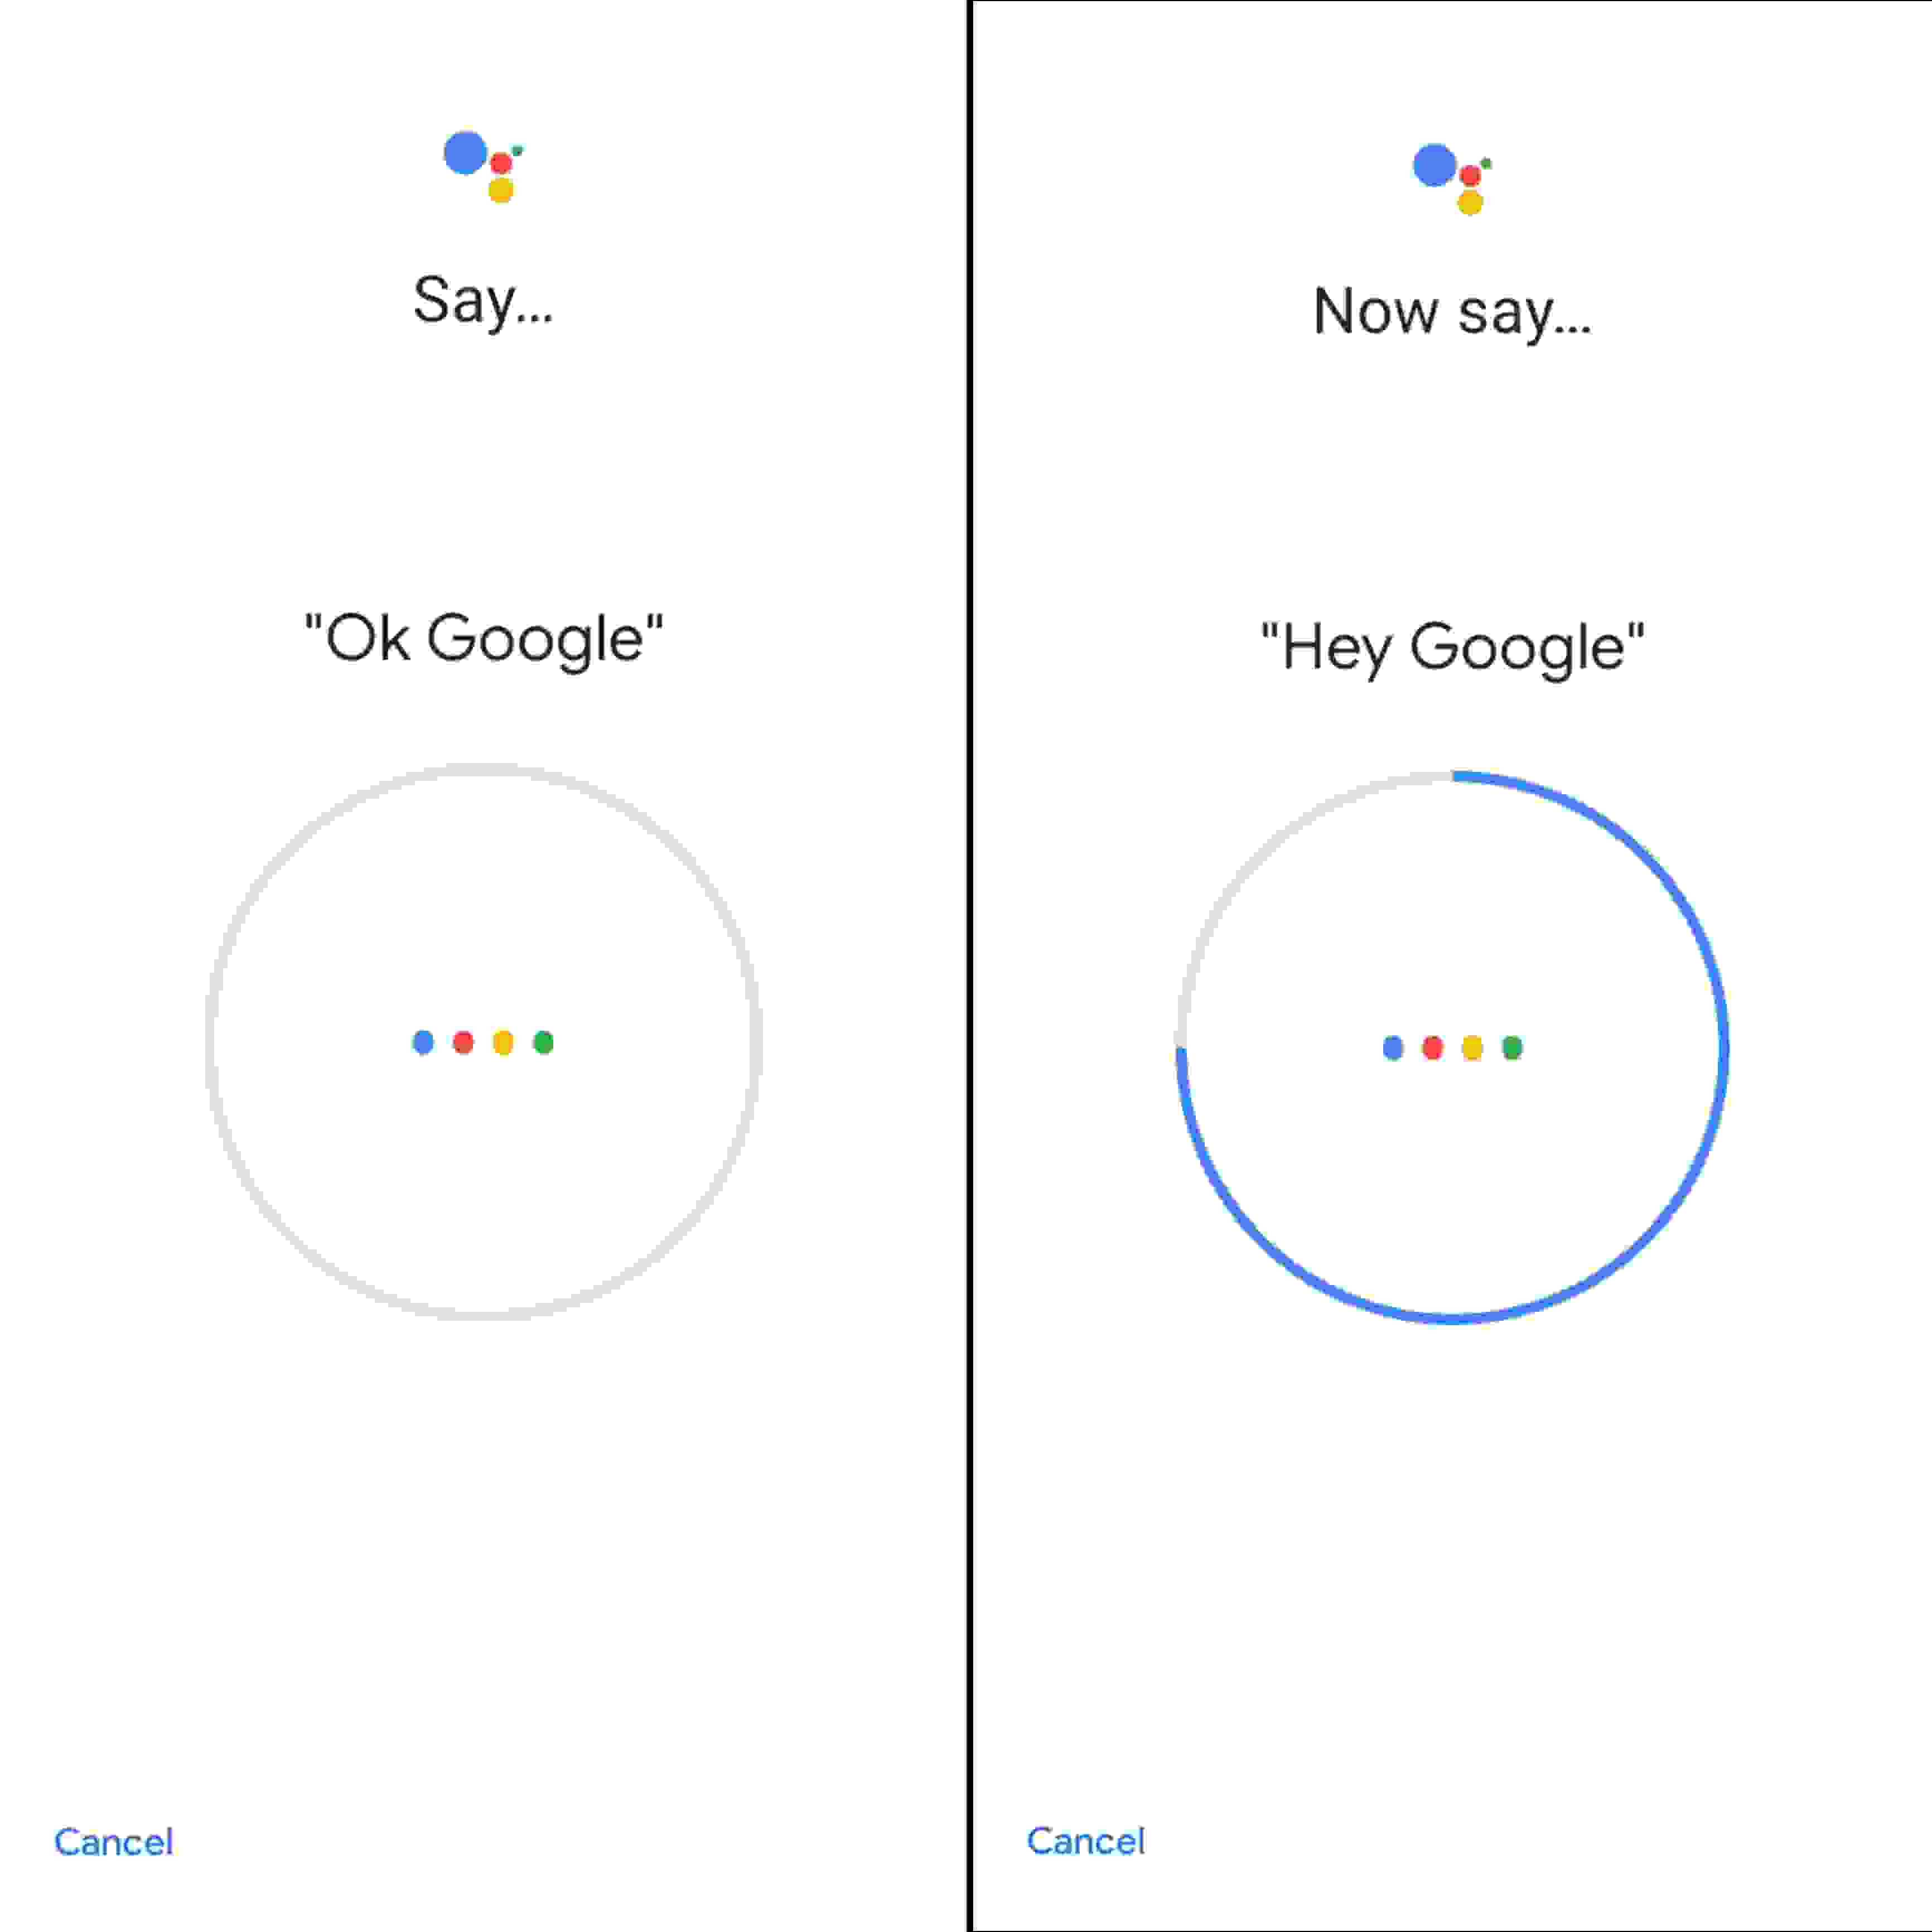 गूगल कैसे चालू करें | Google Kaise Chalu Kare
STEP 5